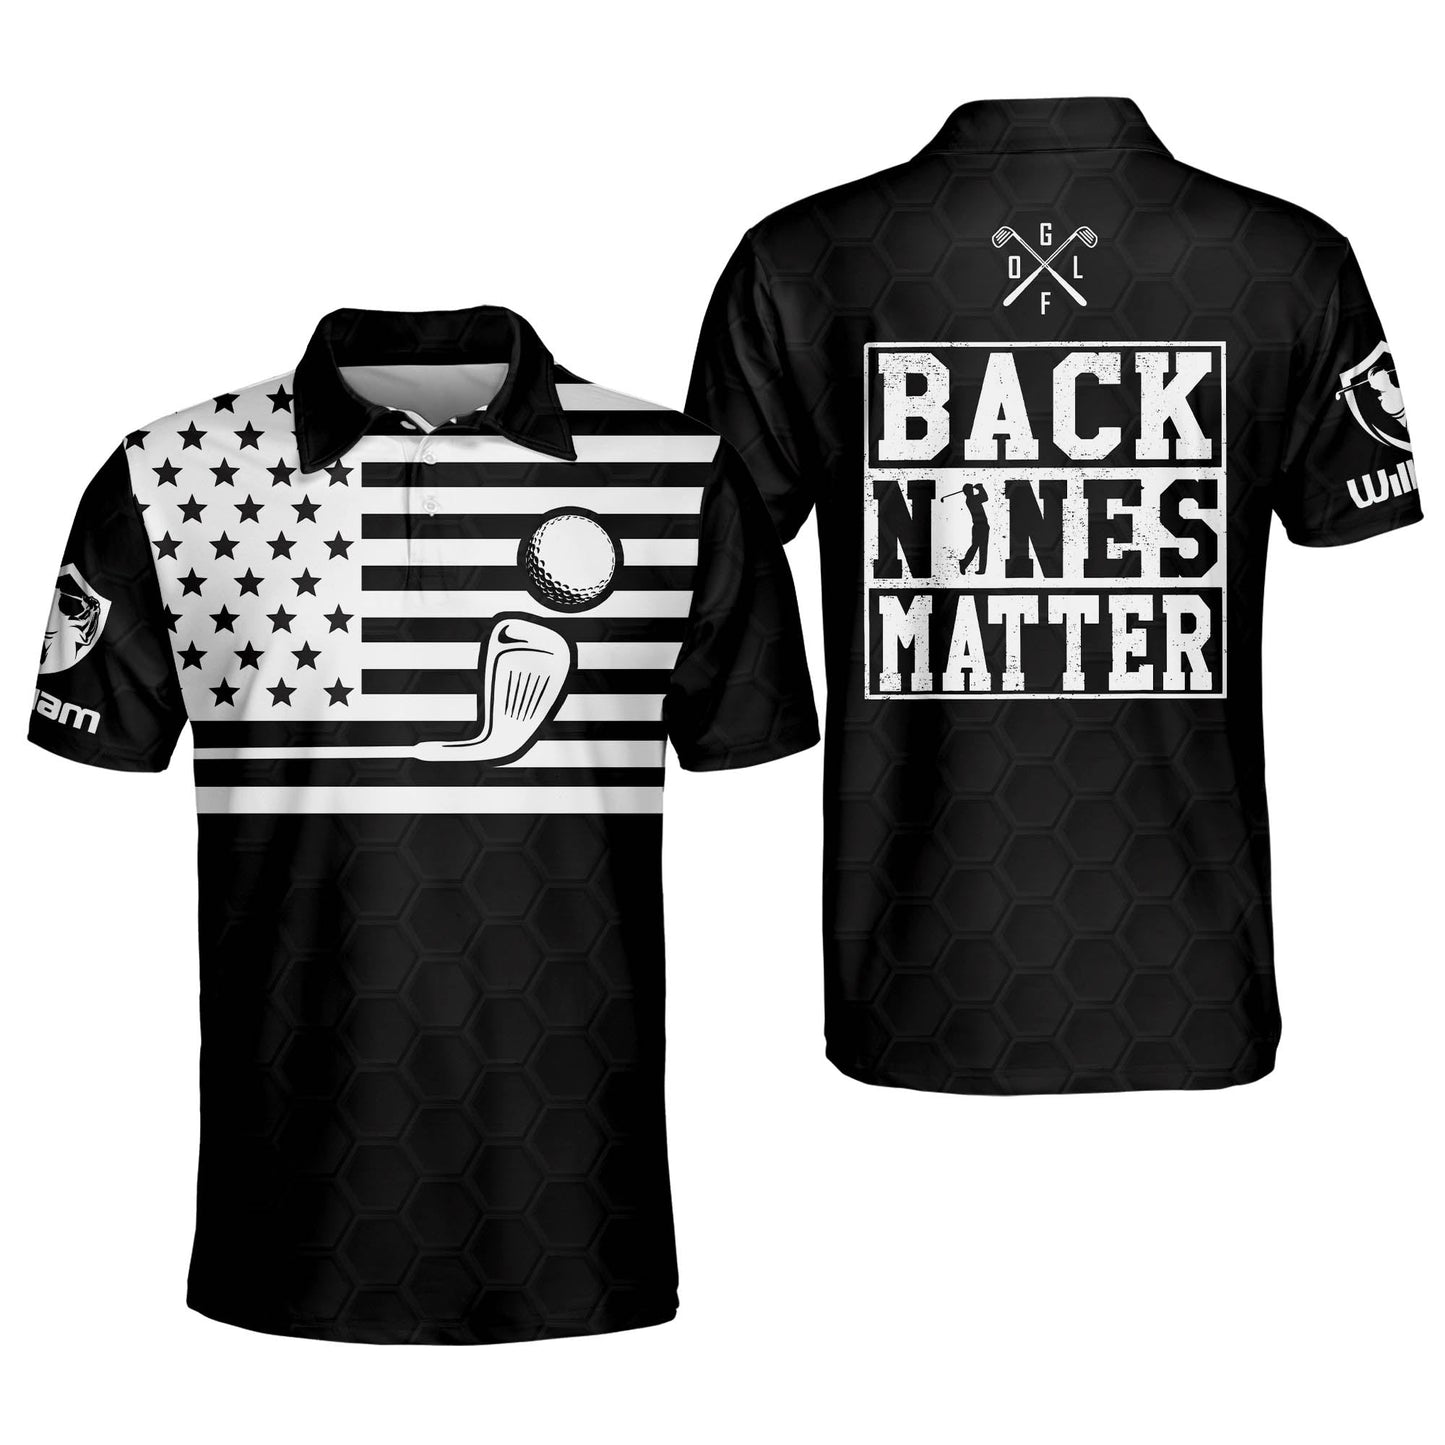 Back Nines Matter Golf Polo Shirts GM0097